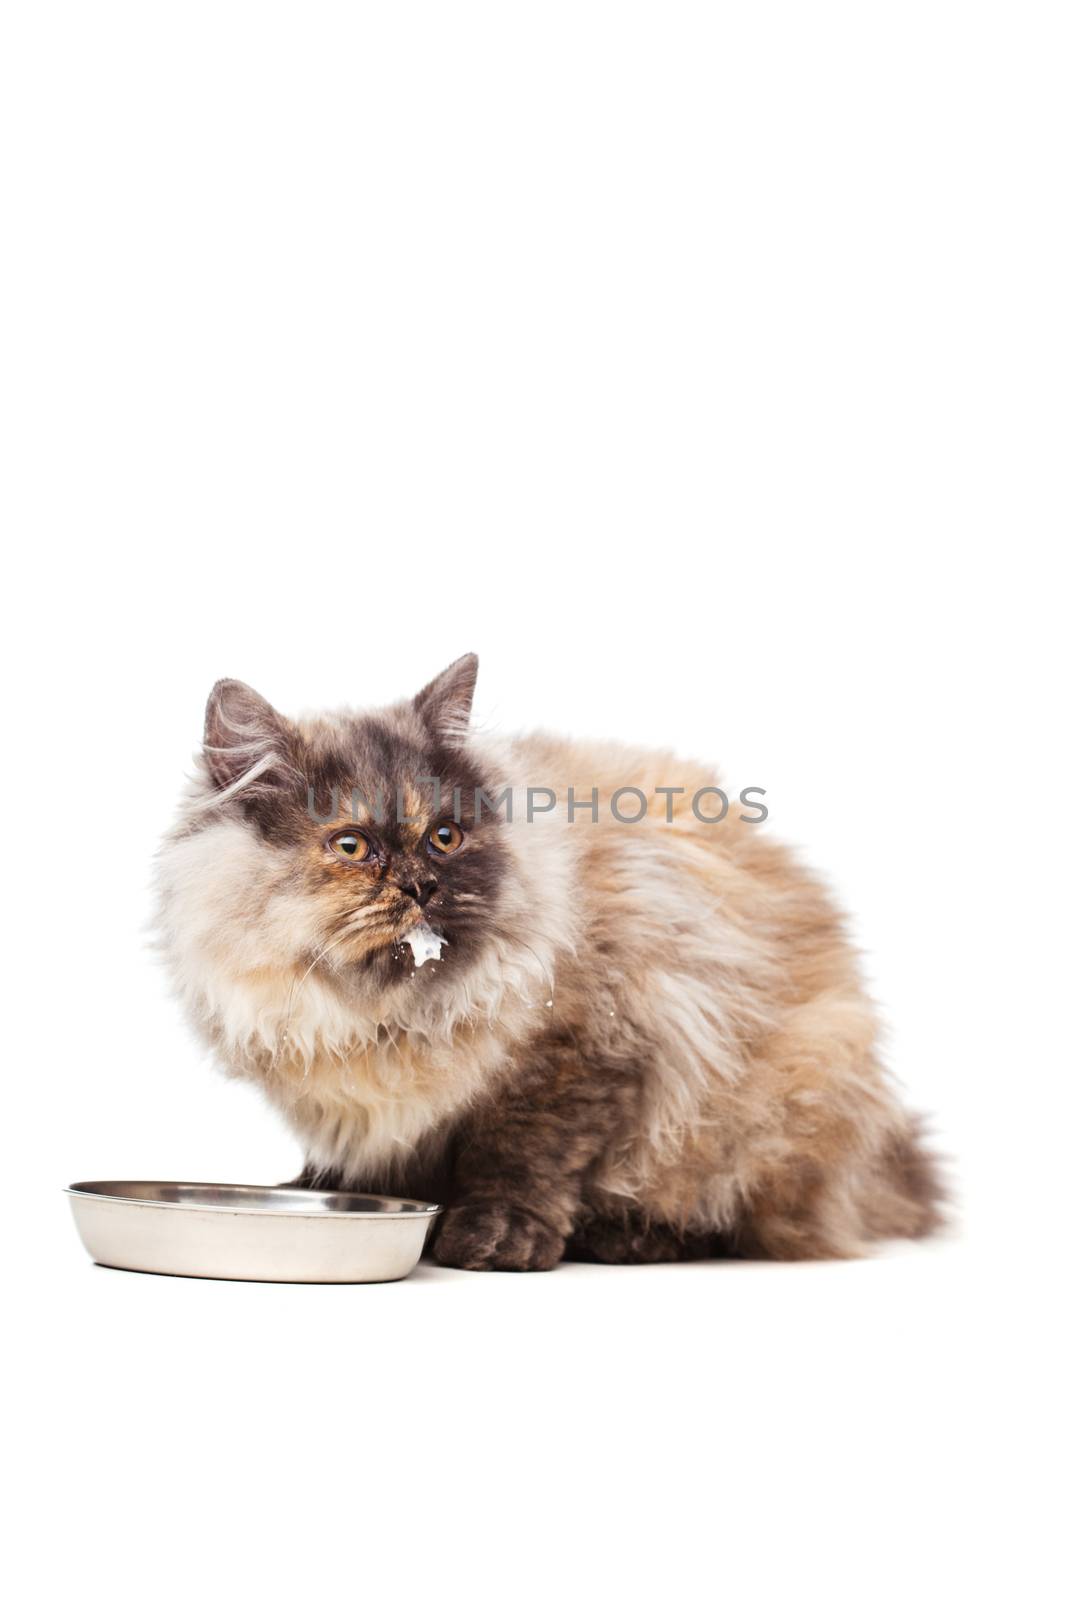 Chinchilla Persian cat with milk by kokimk